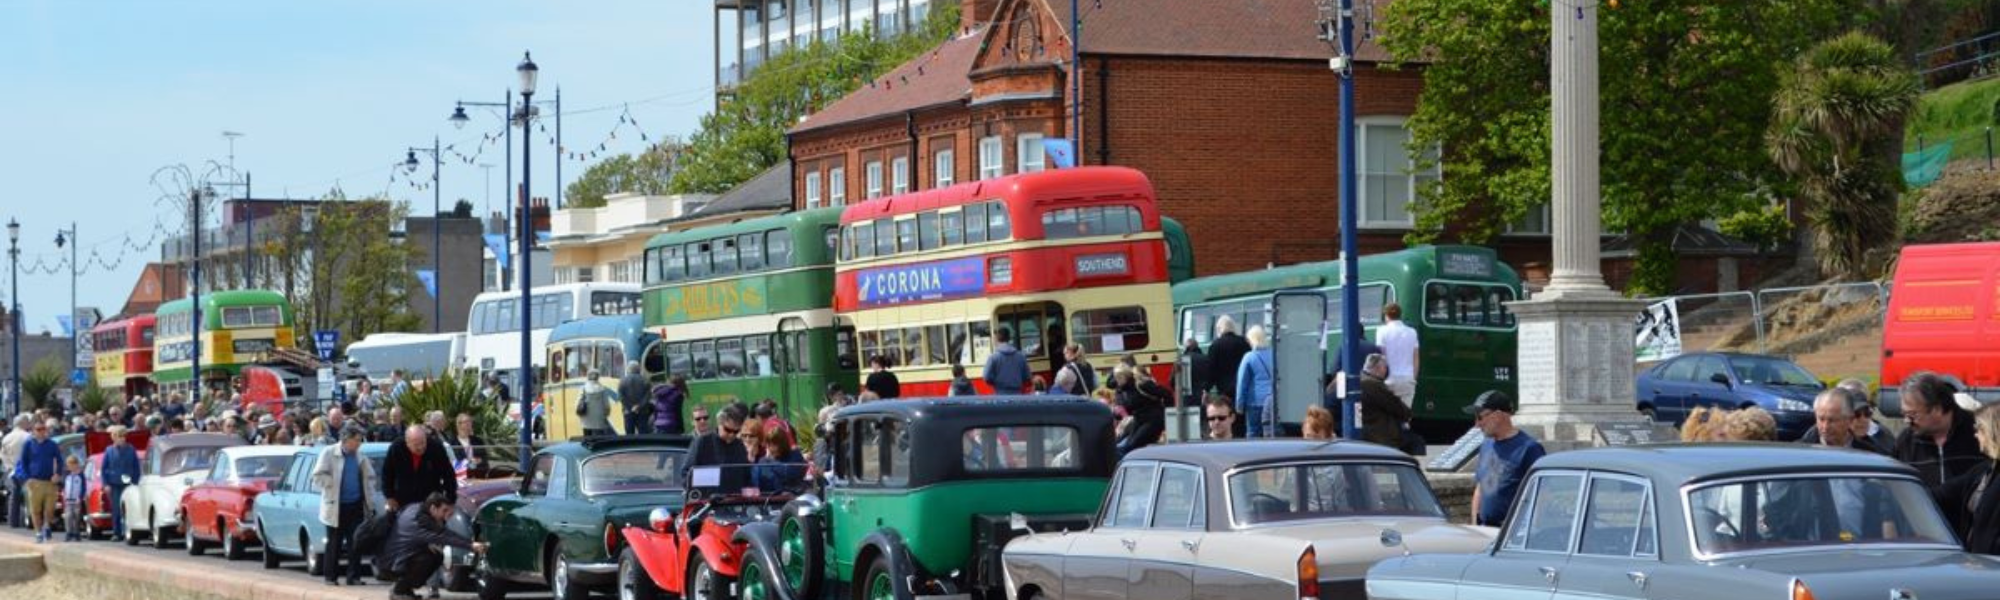 Ipswich transport Museum, Ipswich to Felixstowe historic road run, classic cars 